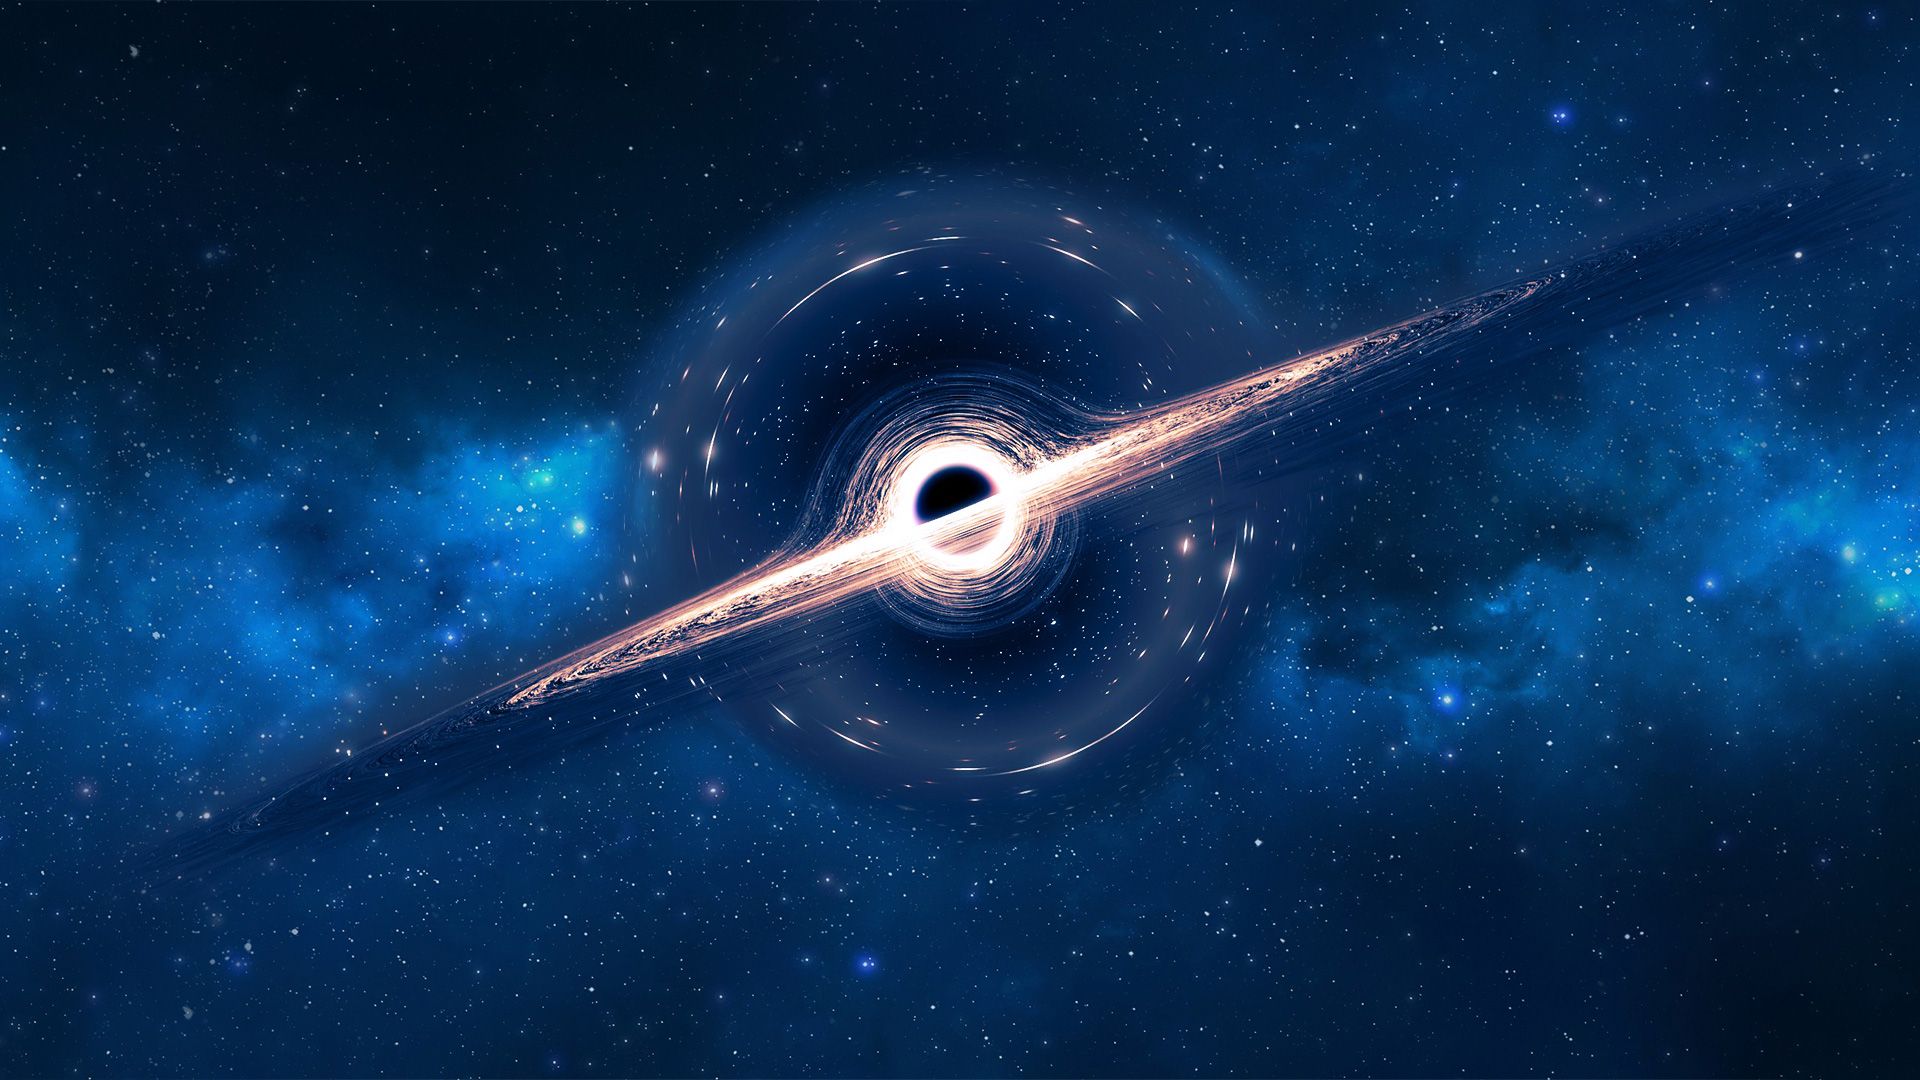 Black Hole, HD Digital Universe, 4k Wallpapers, Image, Backgrounds, Photos ...